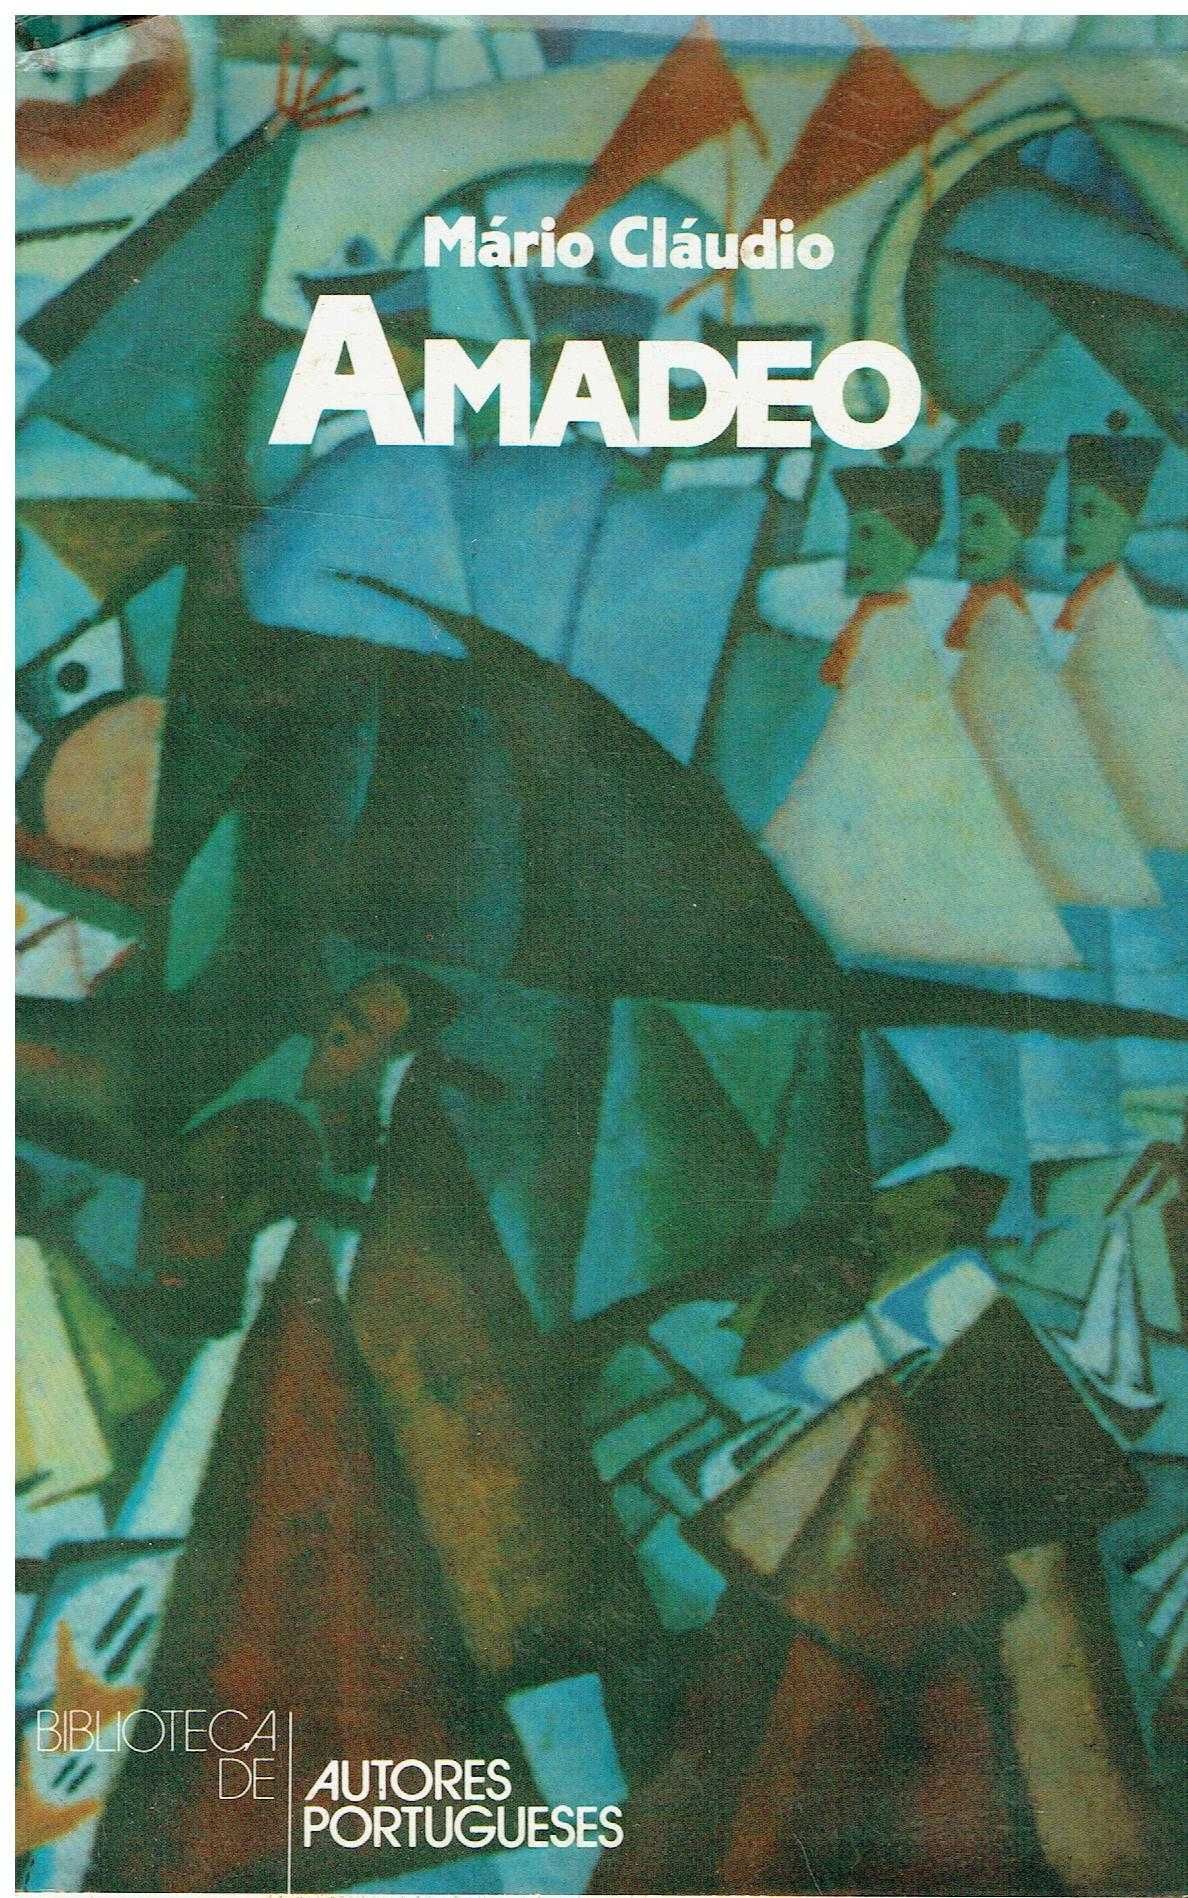 7258

Amadeo  
Mário Cláudio